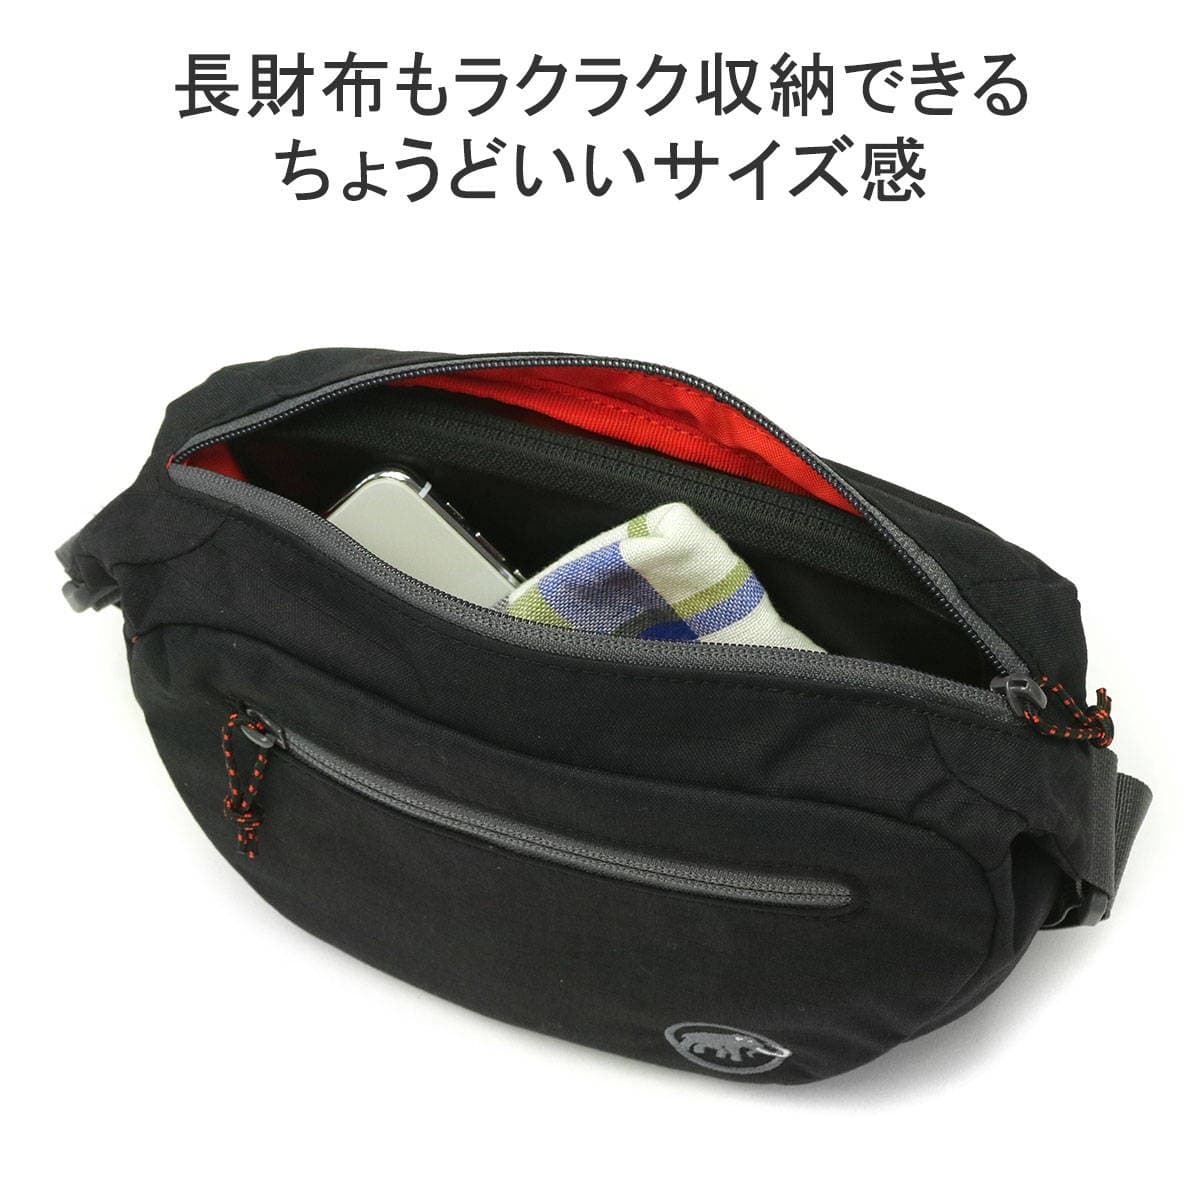 MAMMUT マムート Shoulder Bag Round/HIKING ショルダーバッグ 4L 2520 